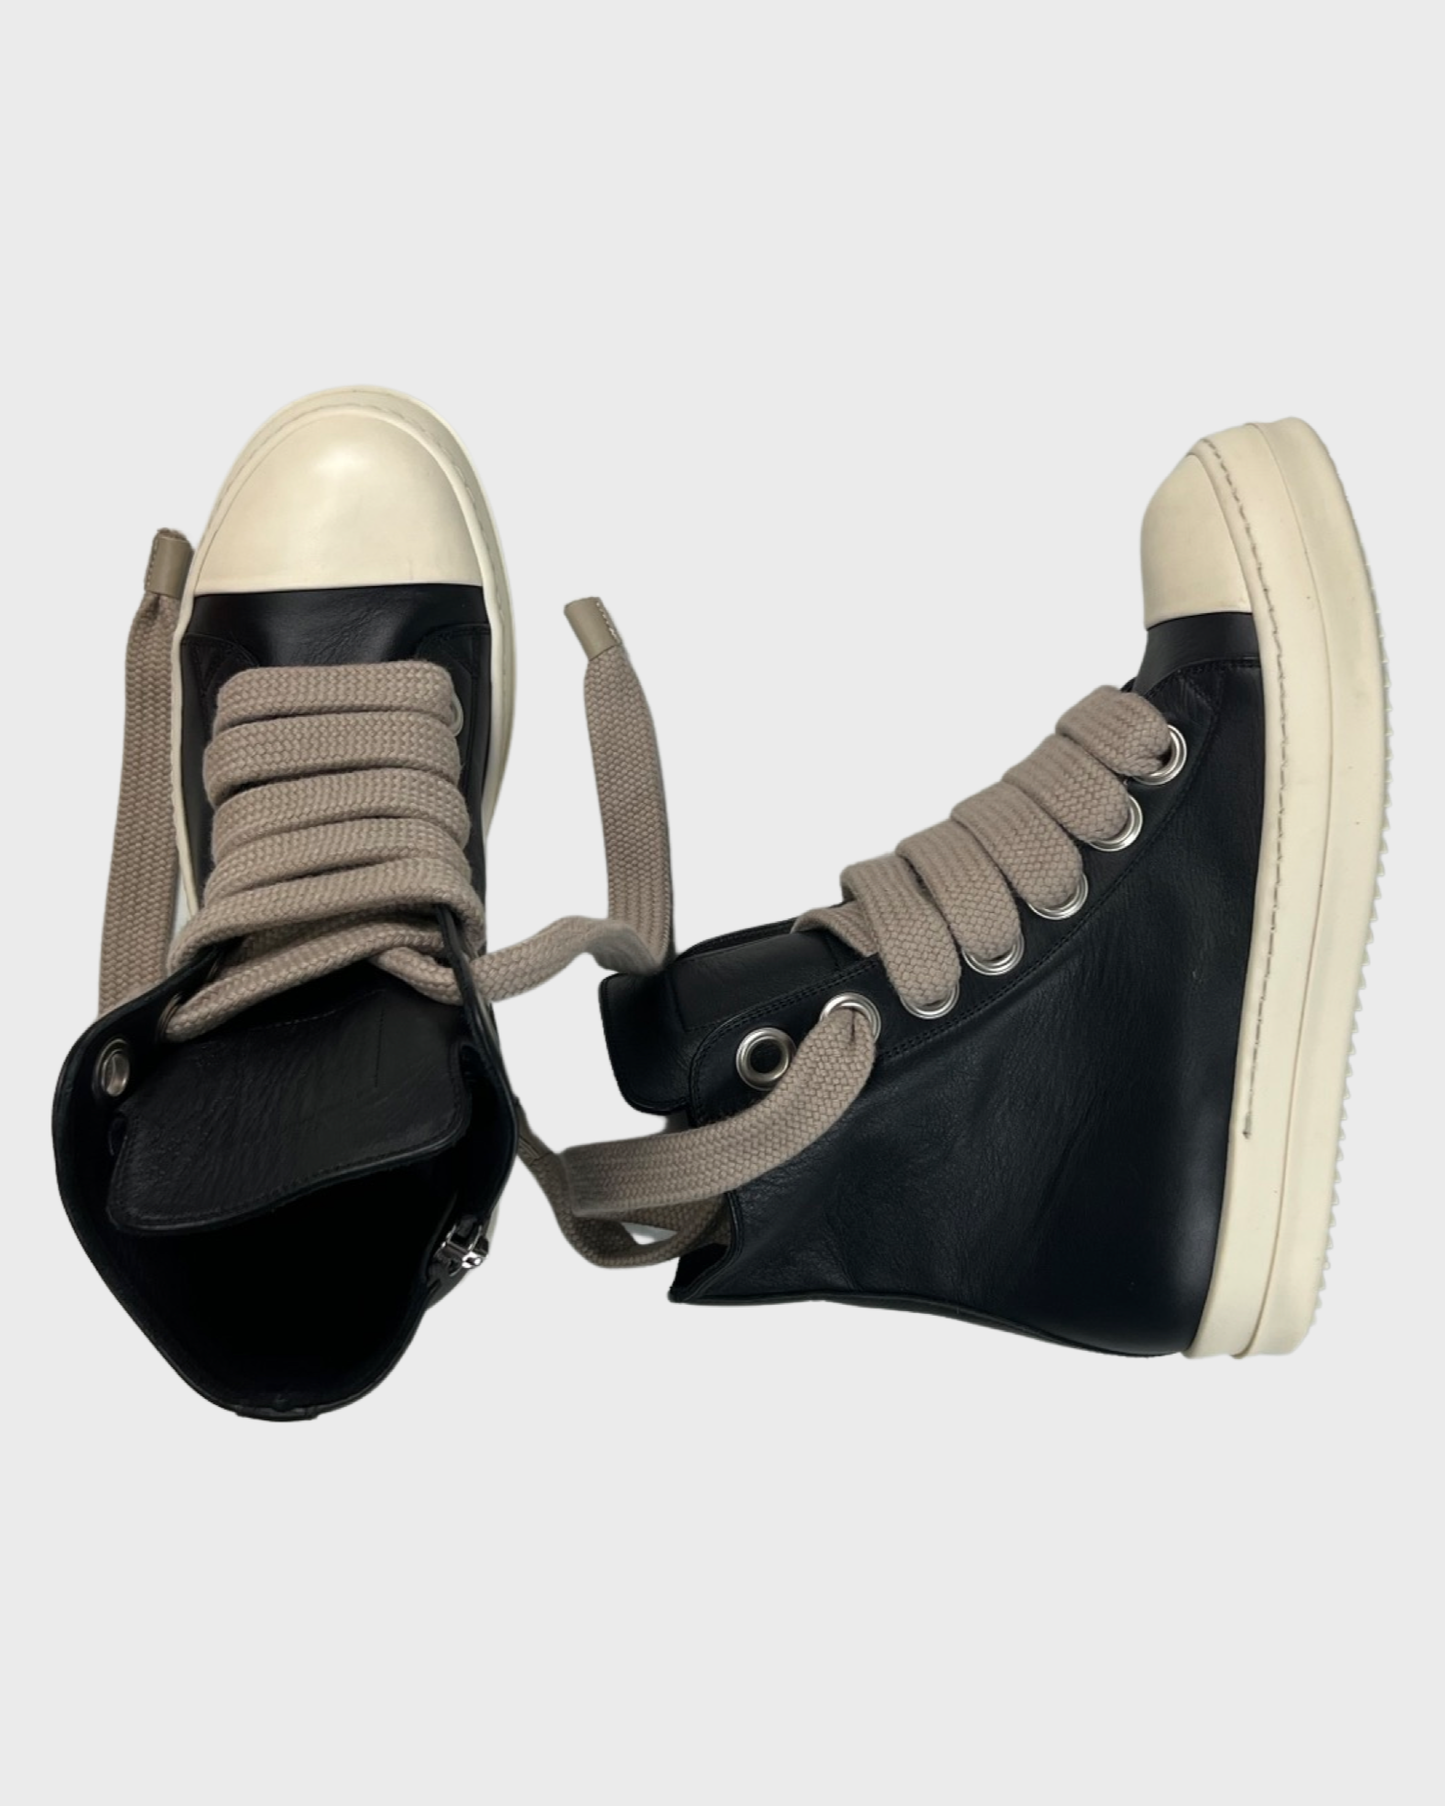 Rick Owens SS23 EDFU collection jumbo laces Ramones High Sneaker in black SZ:41